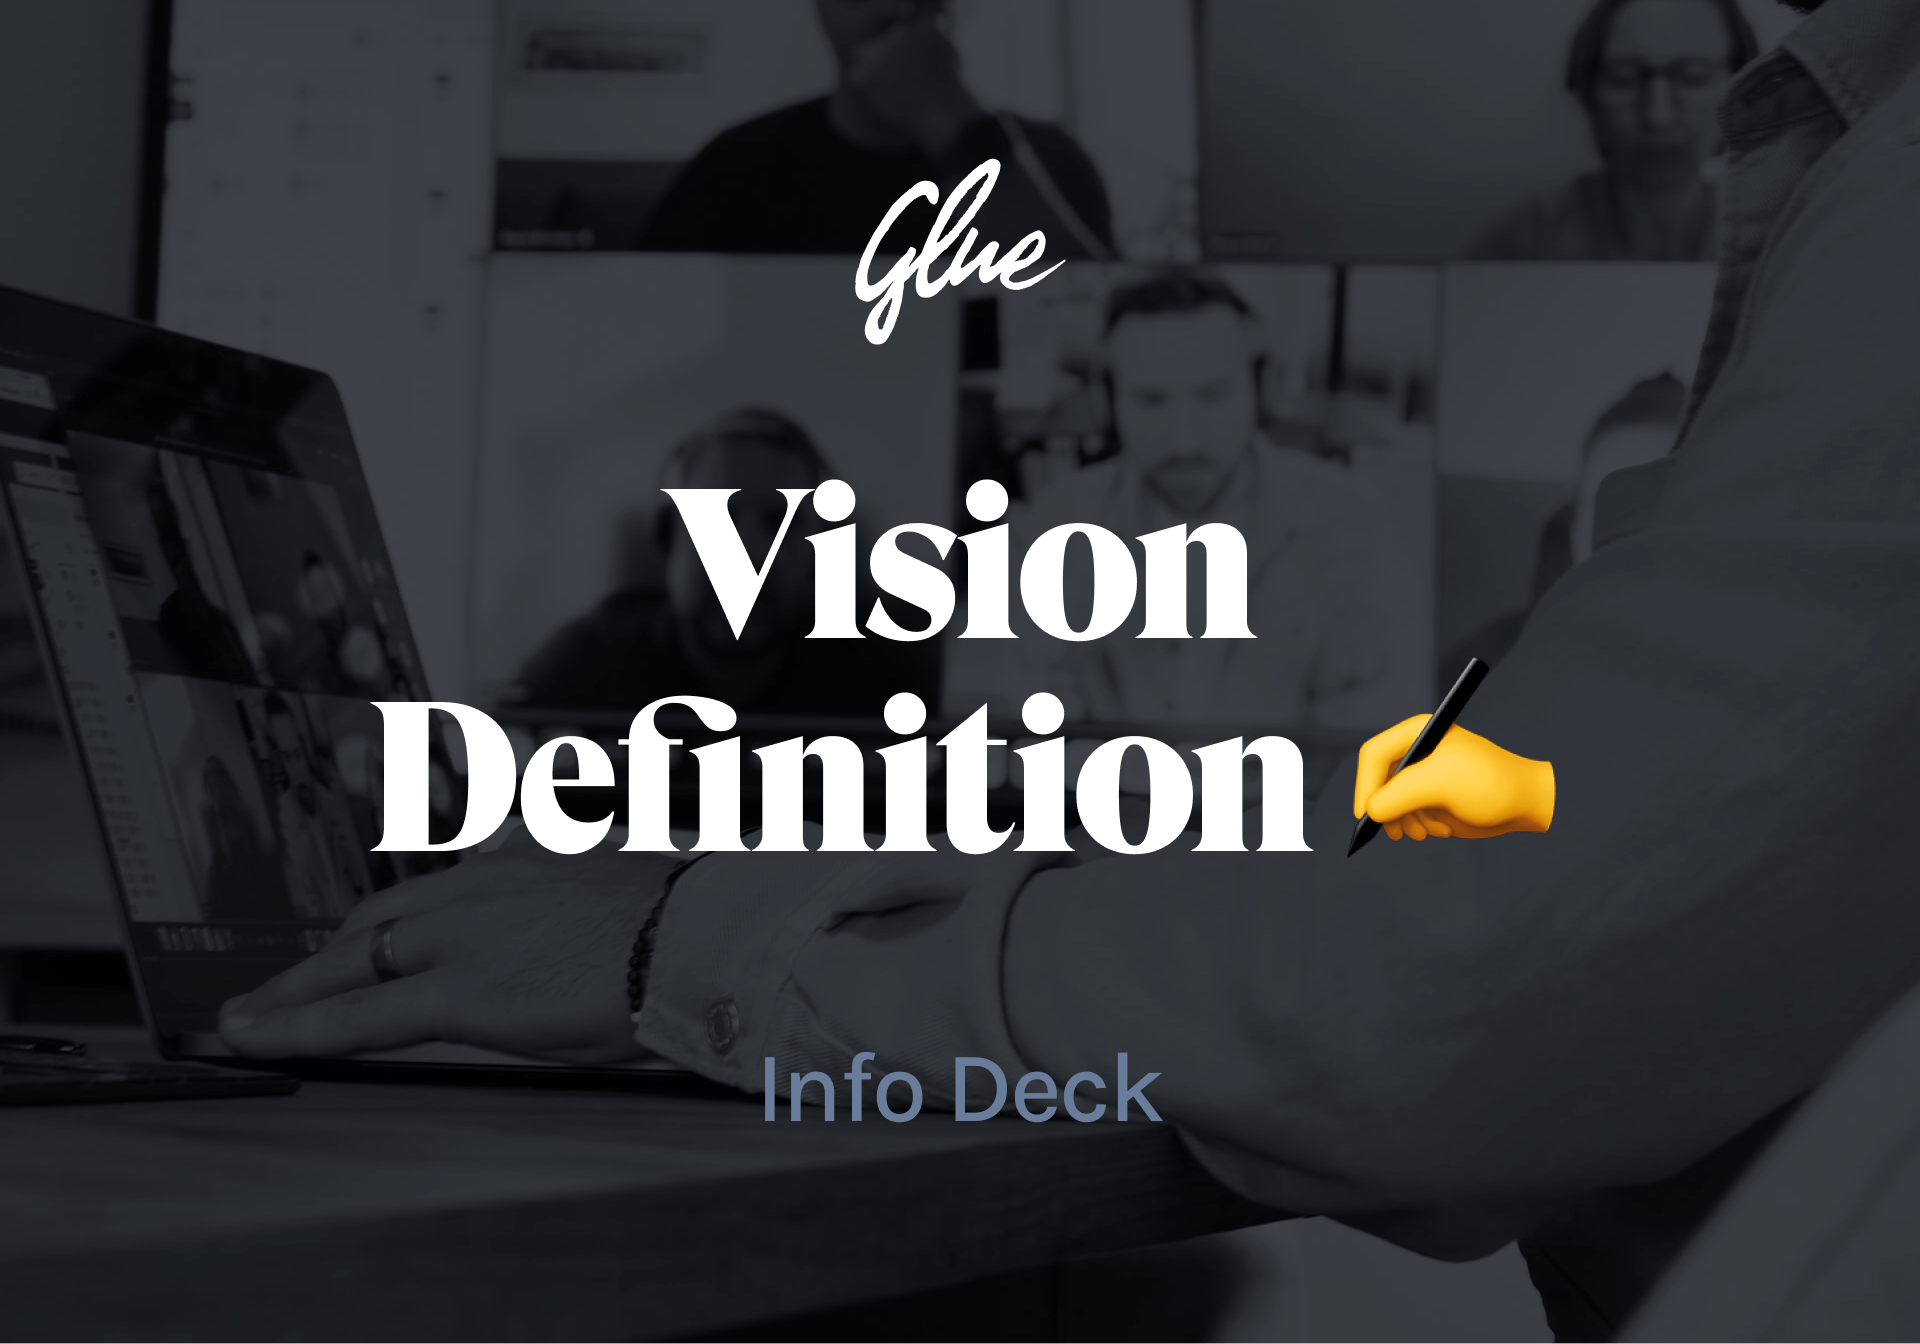 Glue Vision Definition info-deck cover